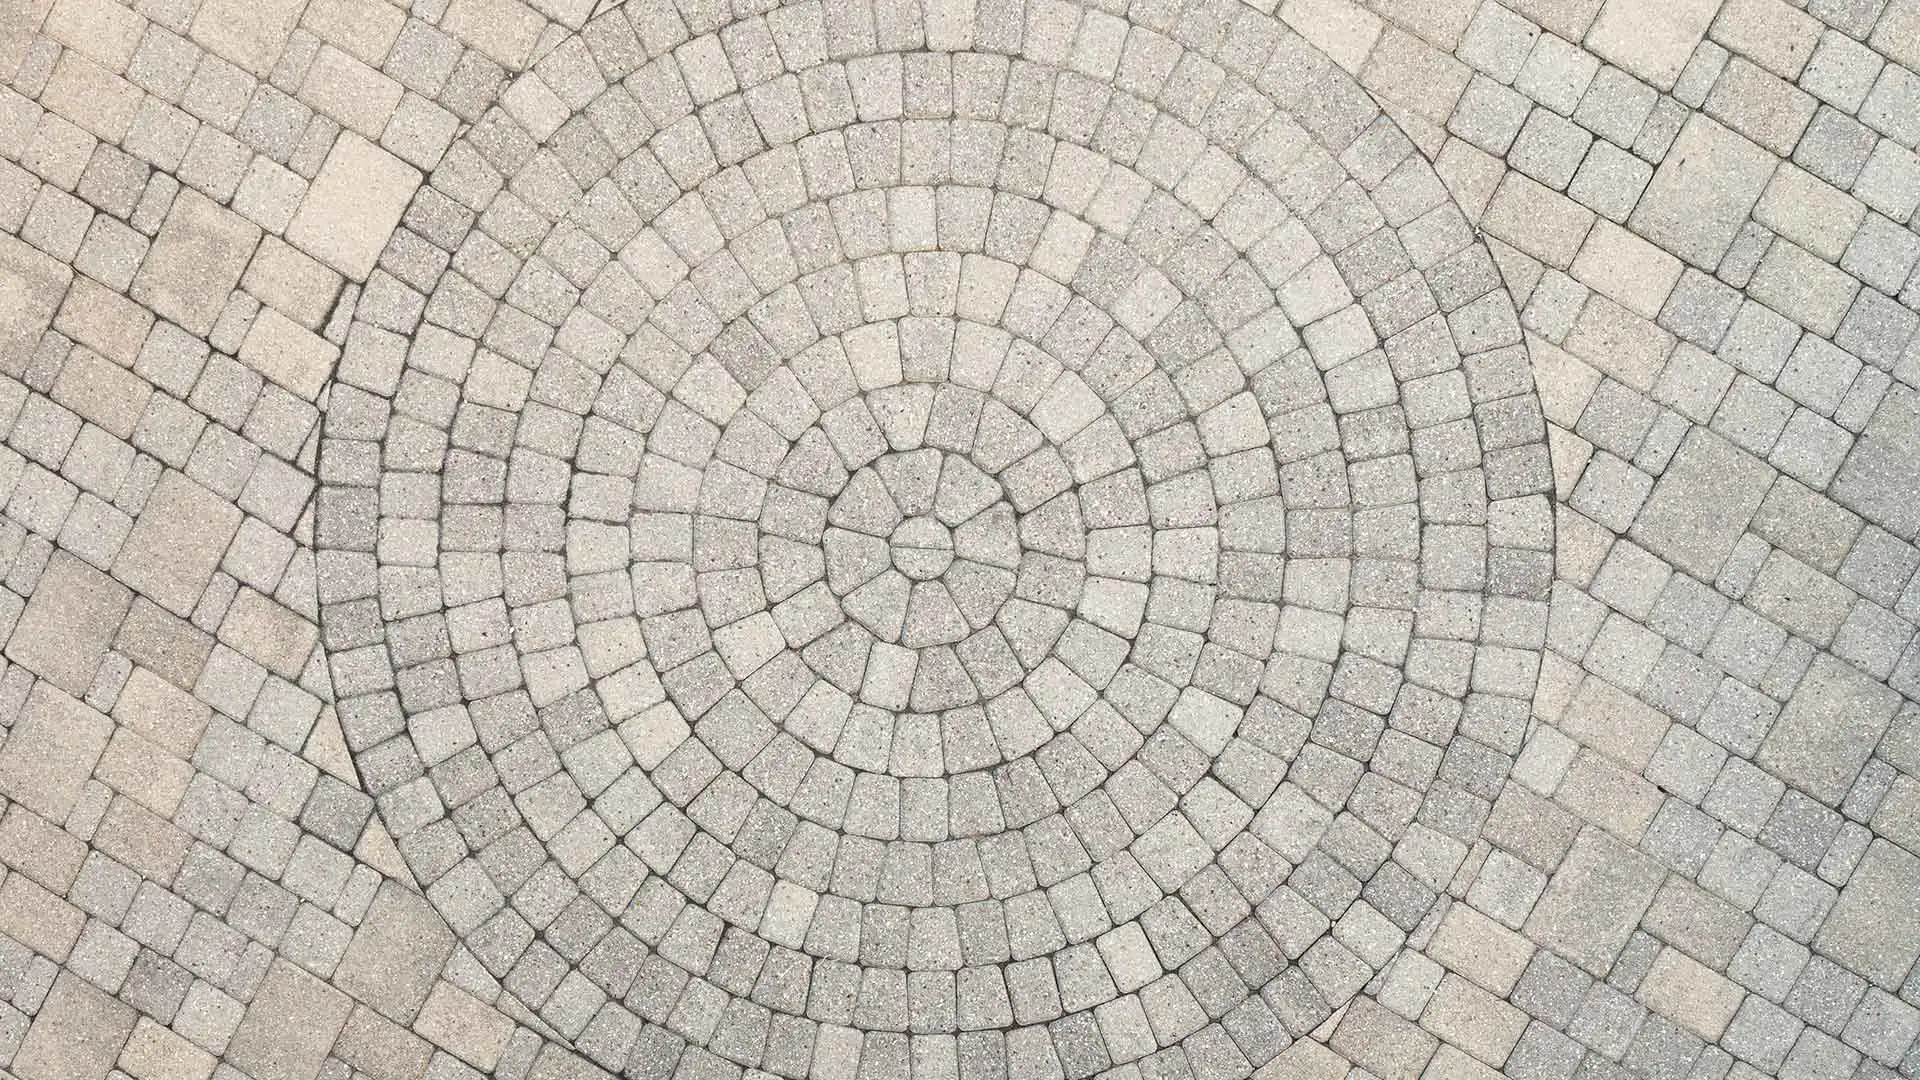 Custom paver patio with circular pattern in Bondurant, IA.